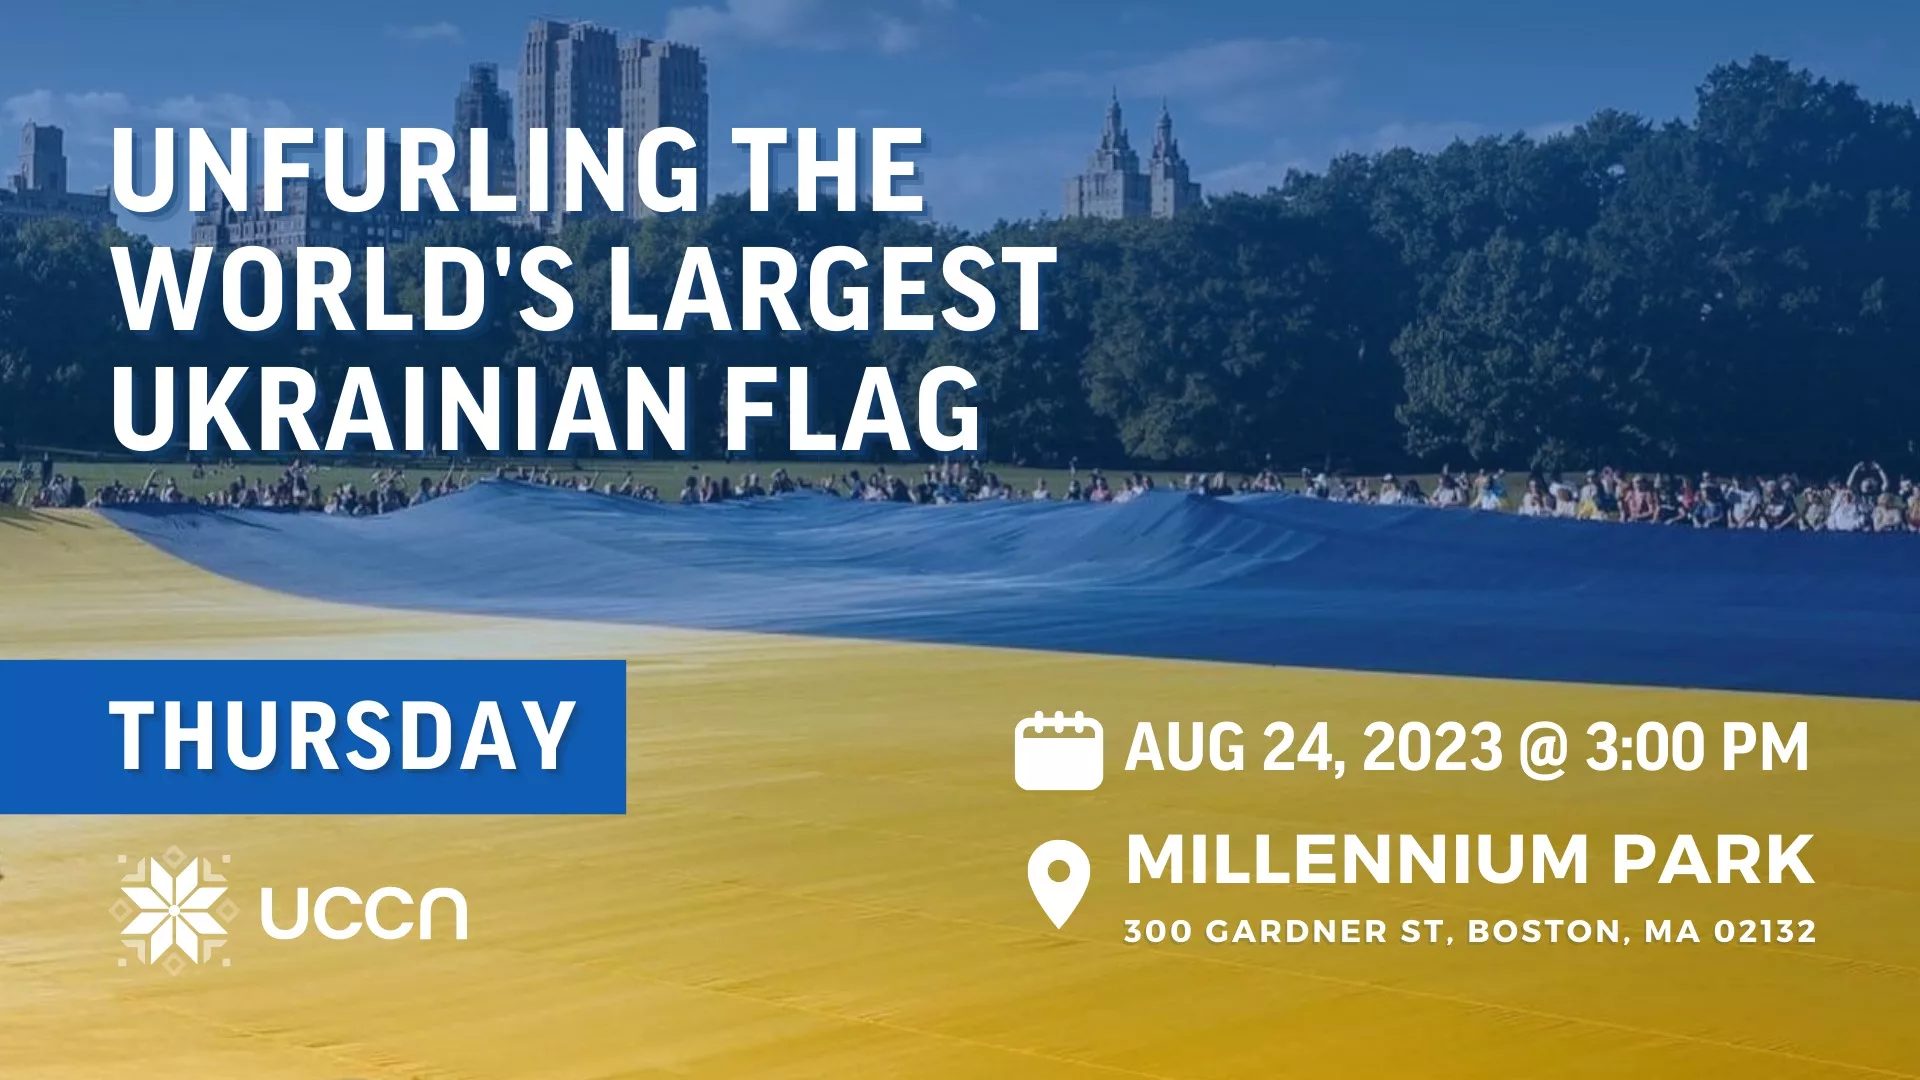 UNFURLING THE WORLD'S LARGEST UKRAINIAN FLAG IN BOSTON